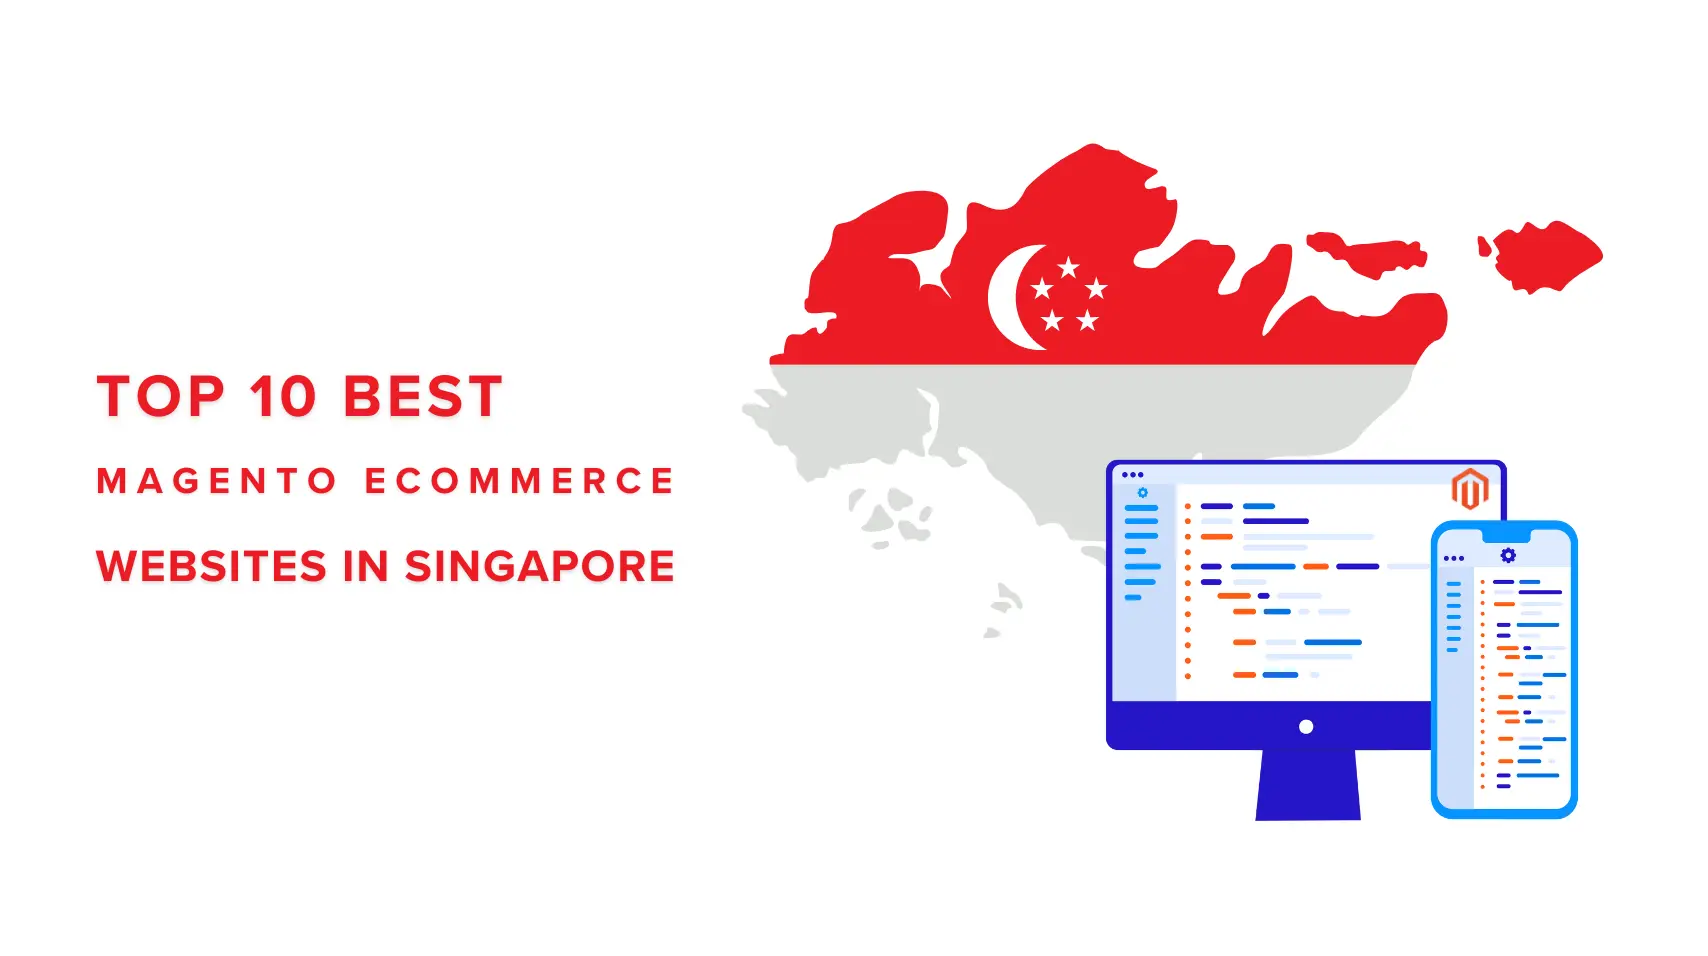 Top 10 Best Magento eCommerce Websites In Singapore